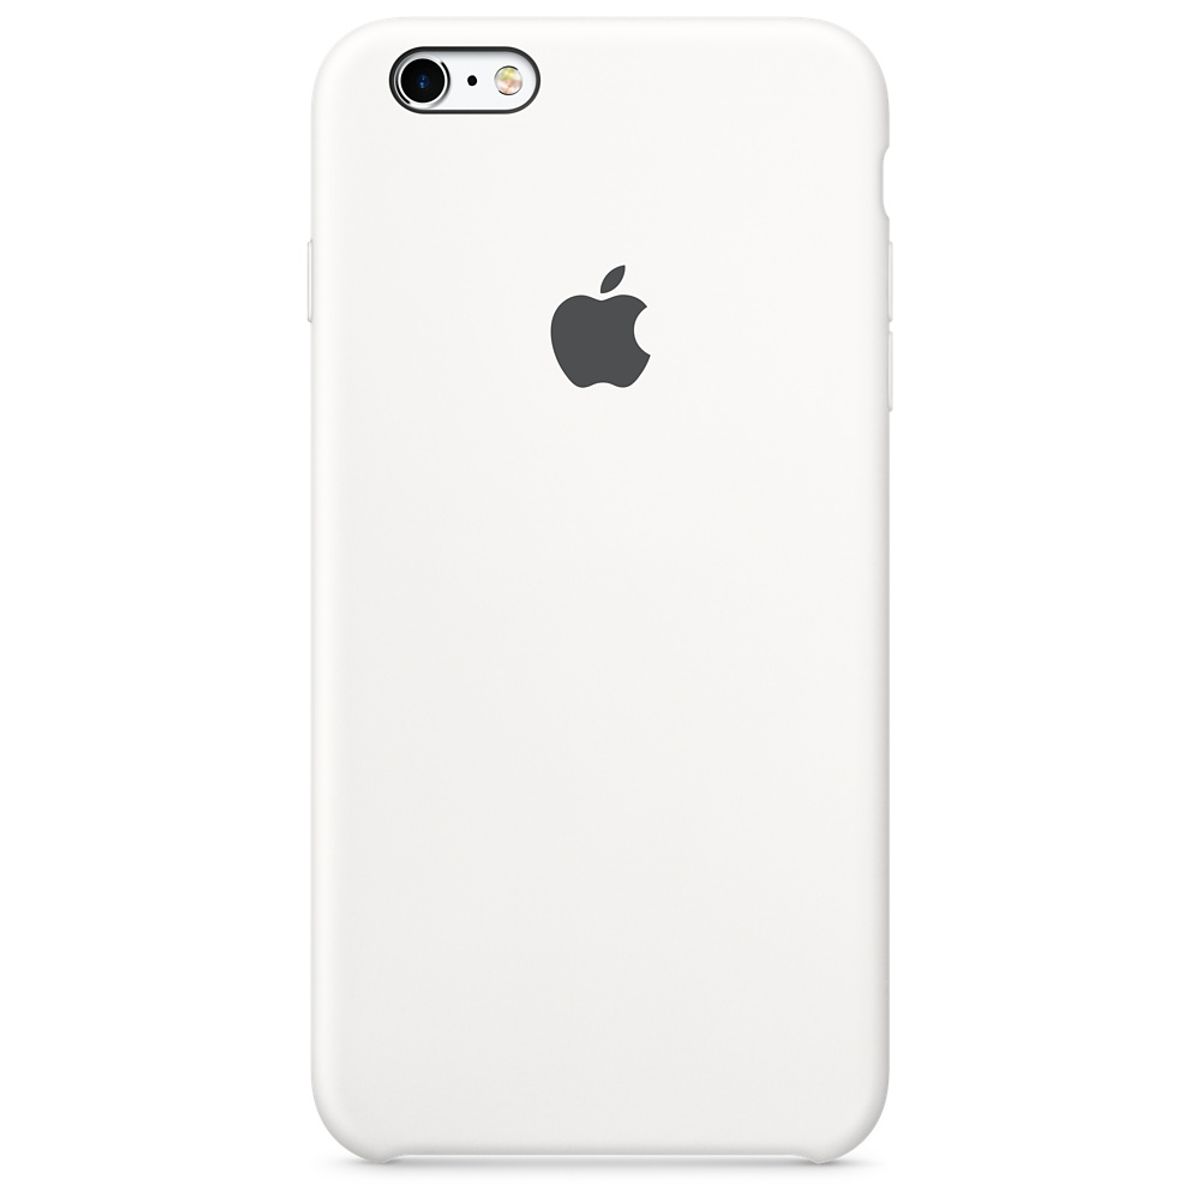 Capa para iPhone 6 e 6S com Furo - Silicone